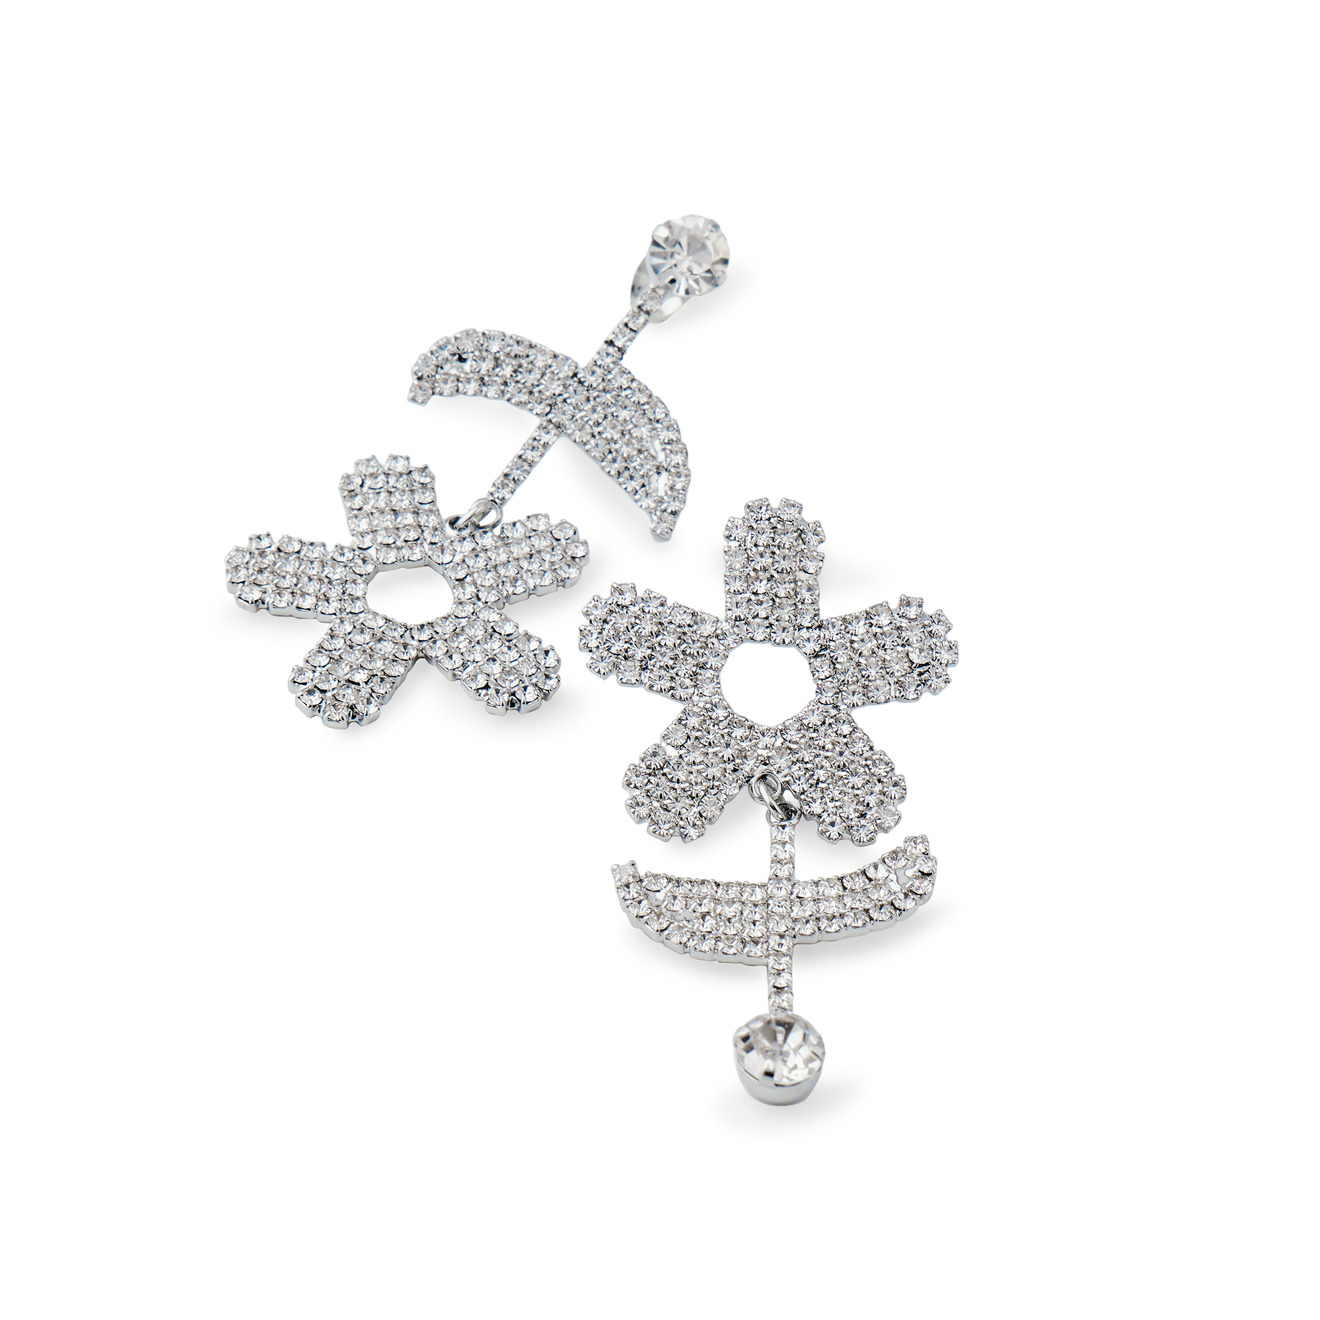 Herald Percy Серебристые серьги-цветы с кристаллами herald percy серебристые серьги смайлики с кристаллами